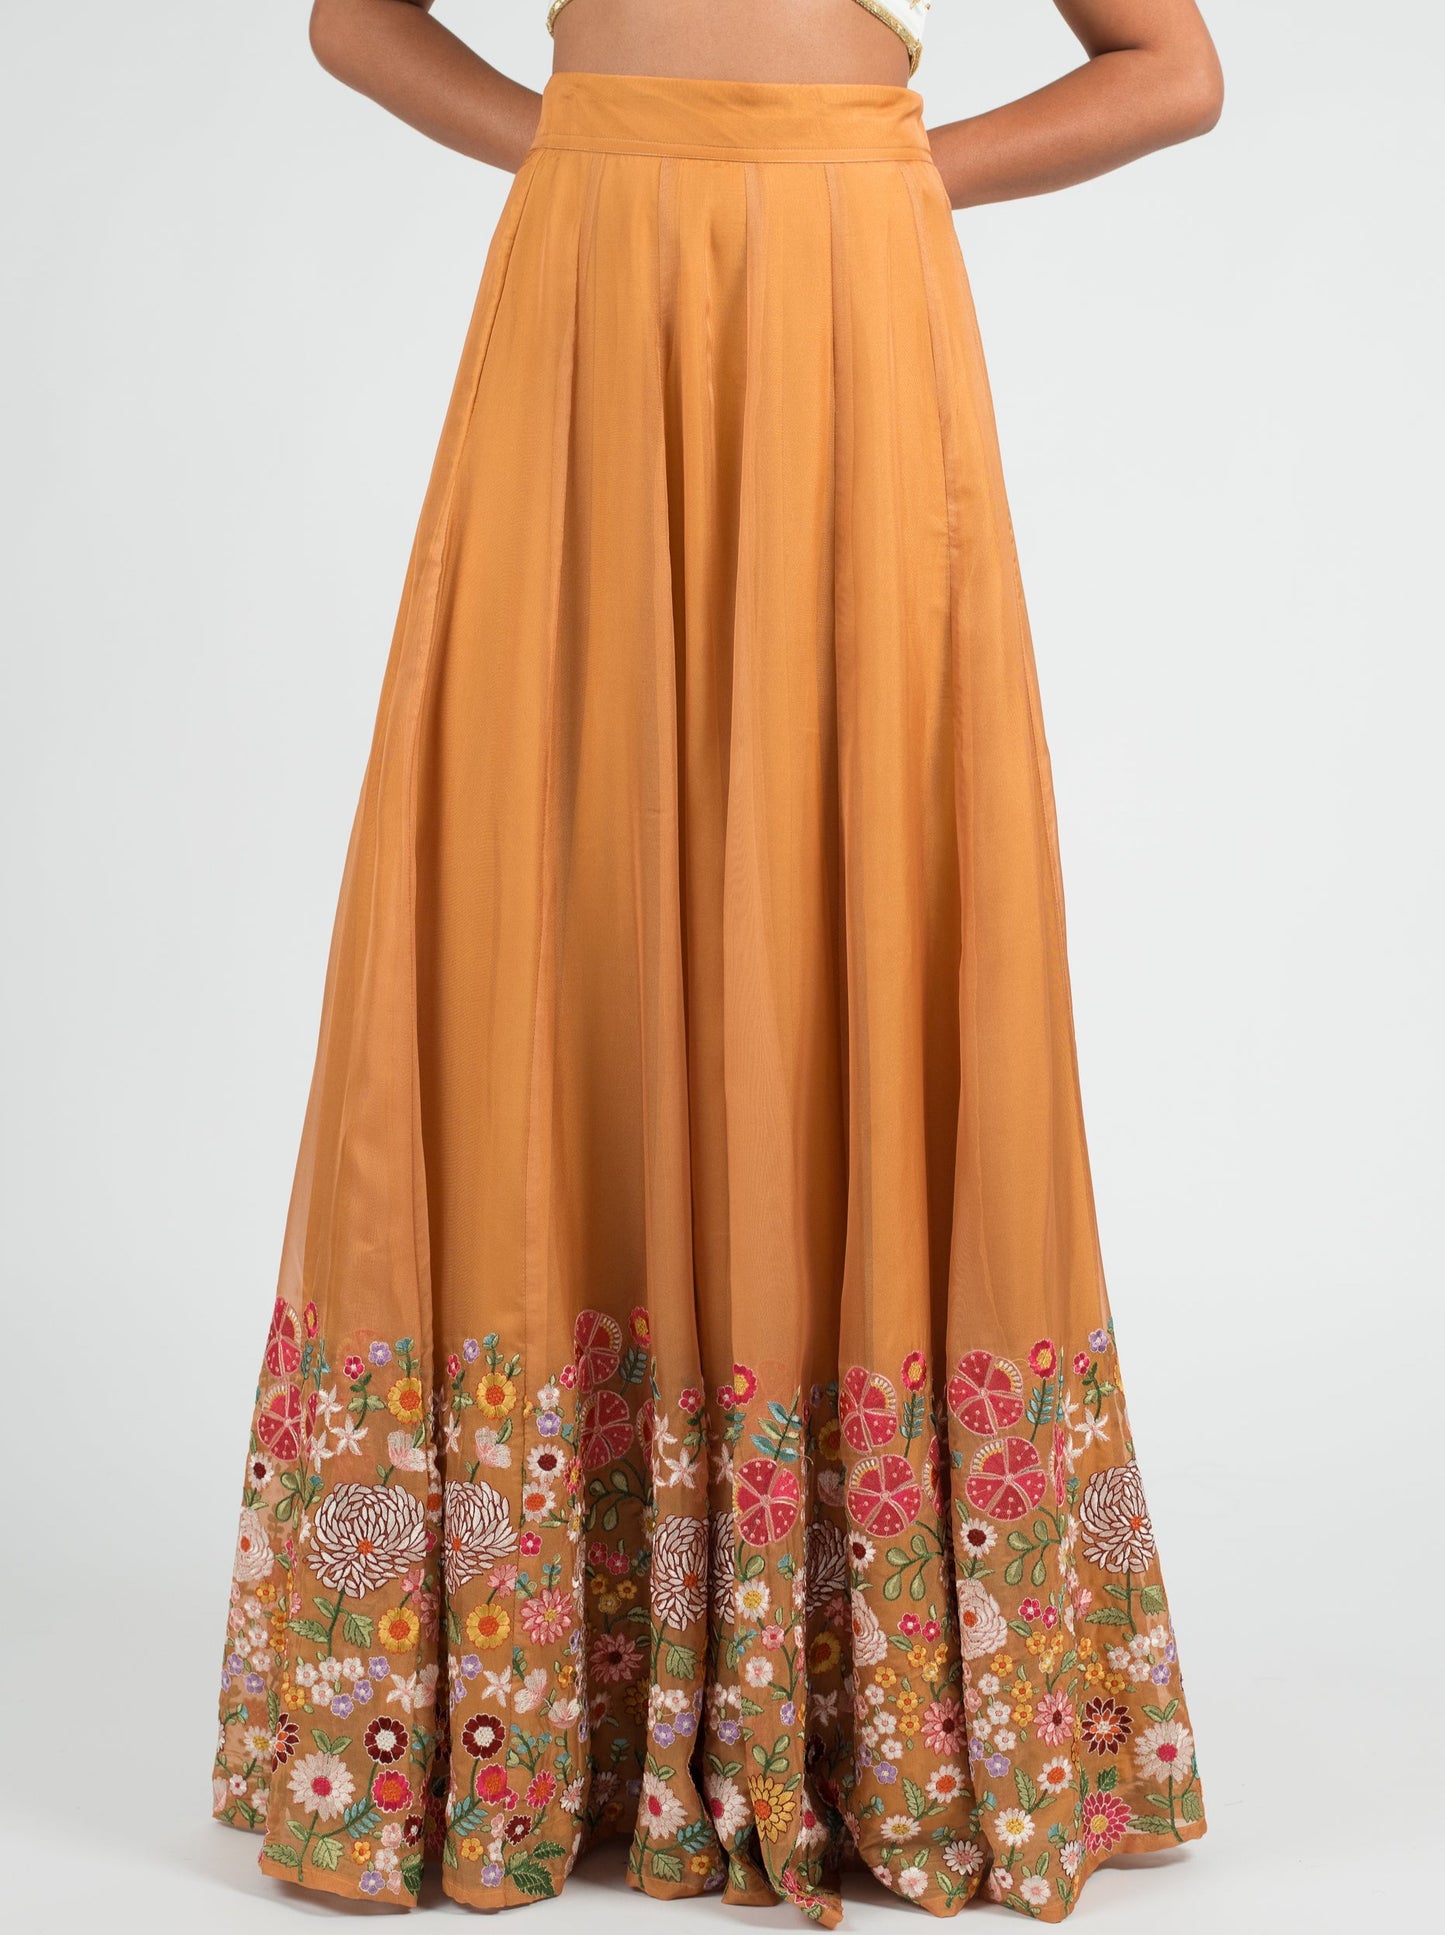 Saffron Autumn Skirt